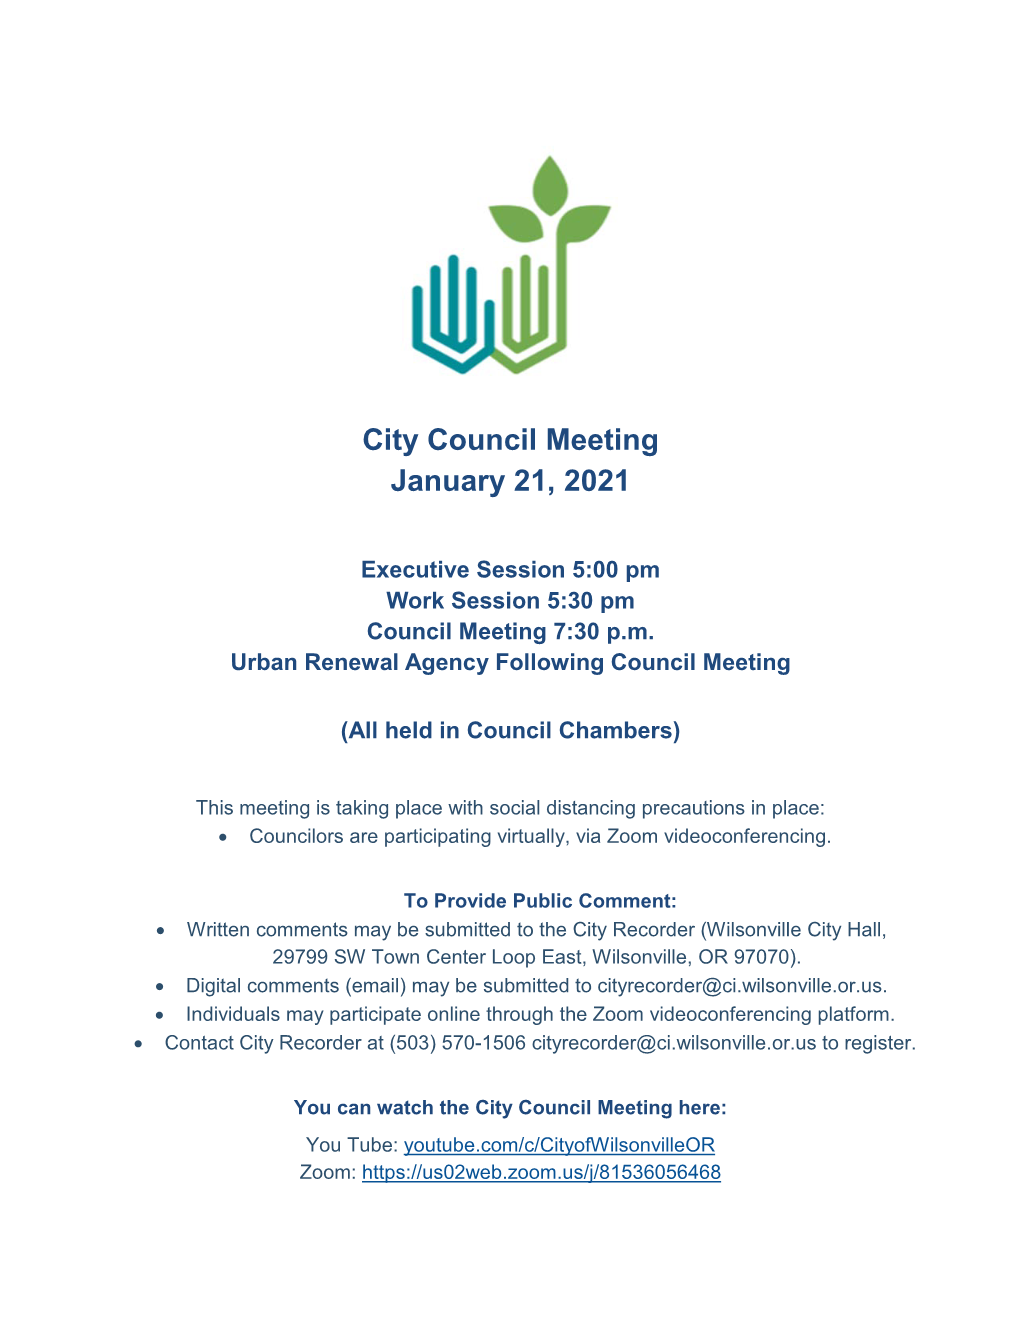 City Council Meeting January 21, 2021